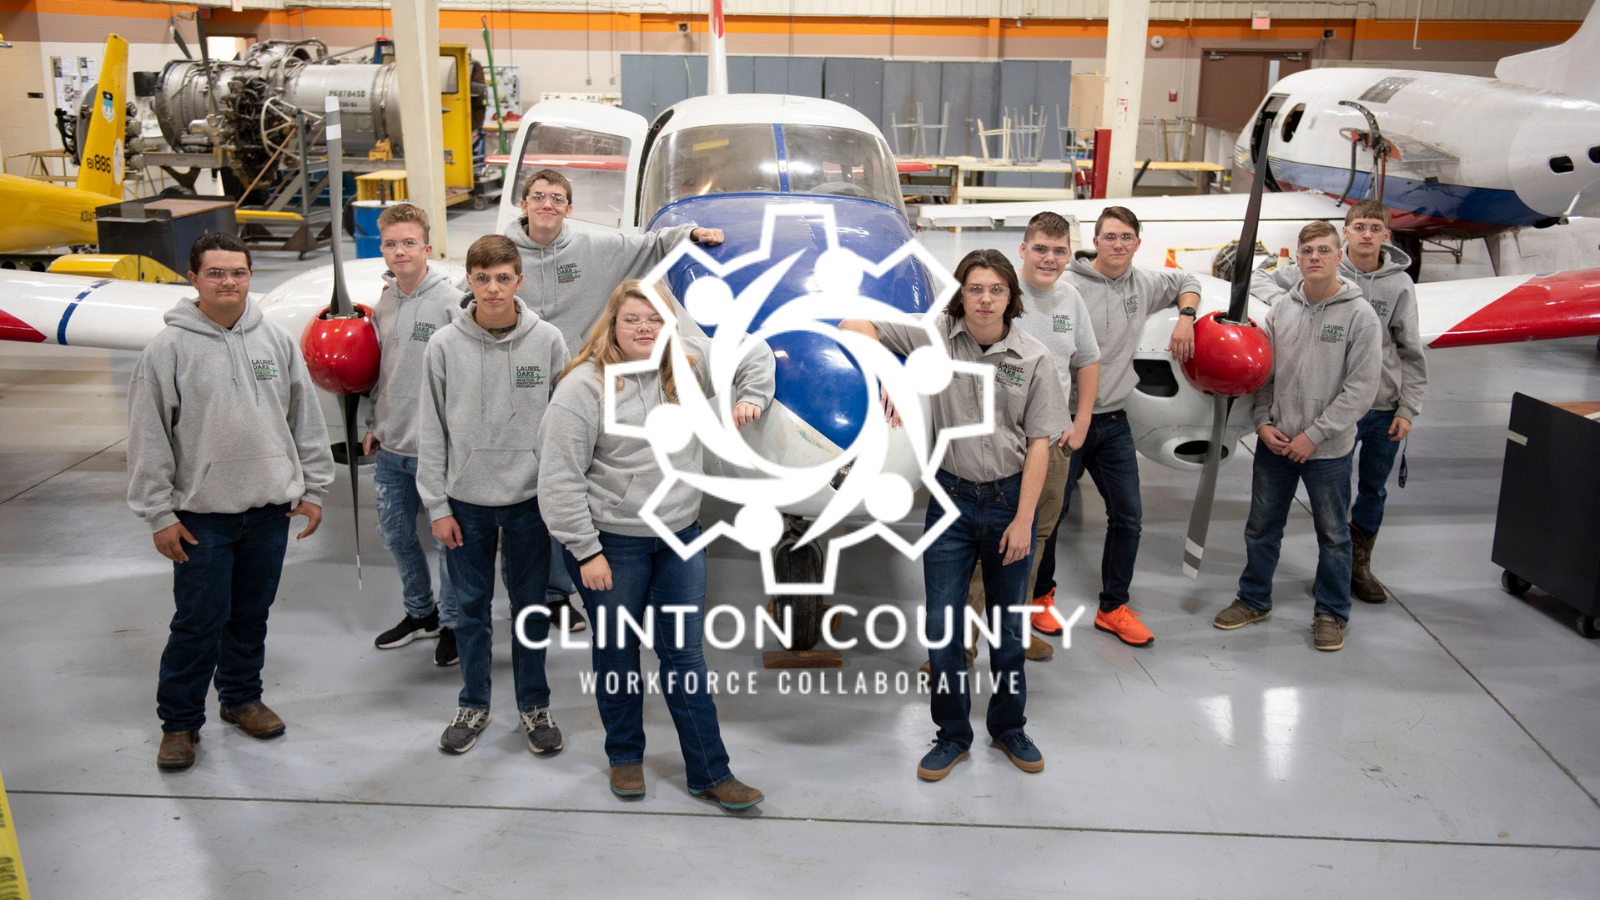 Clinton County Workforce Partner